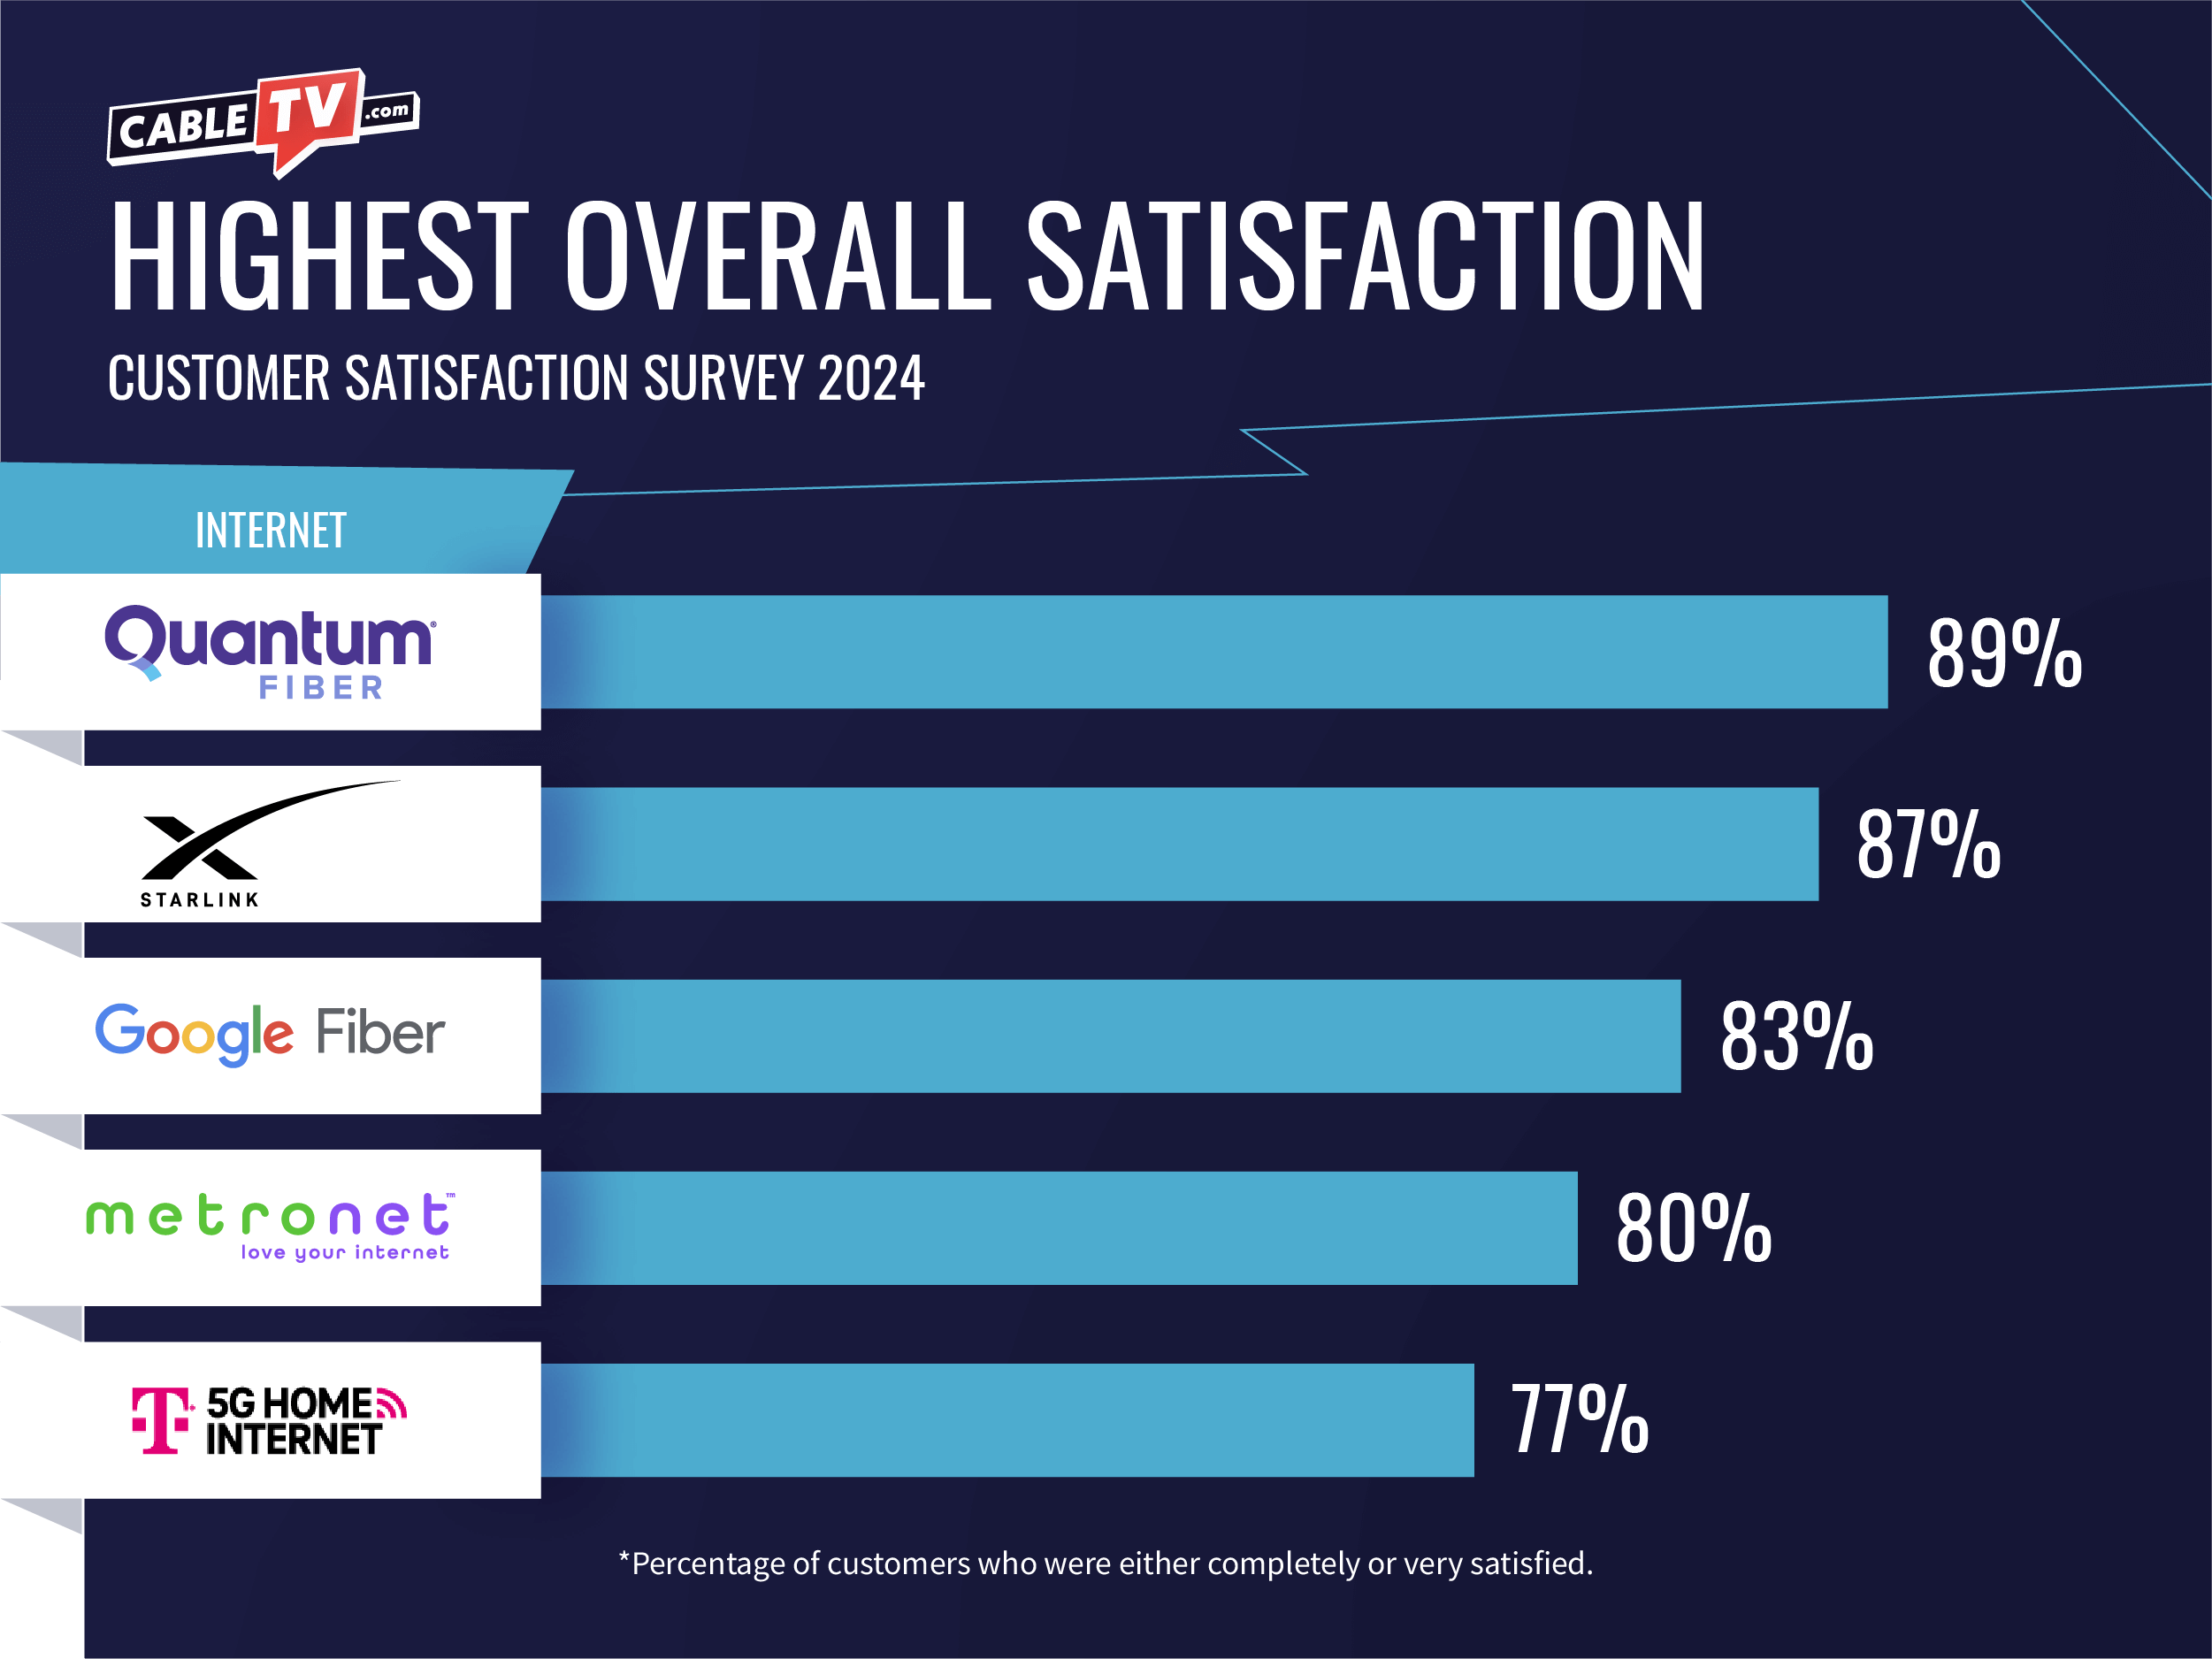 Top spots for highest overall satisfaction go to Quantum Fiber, Starlink, and Google Fiber